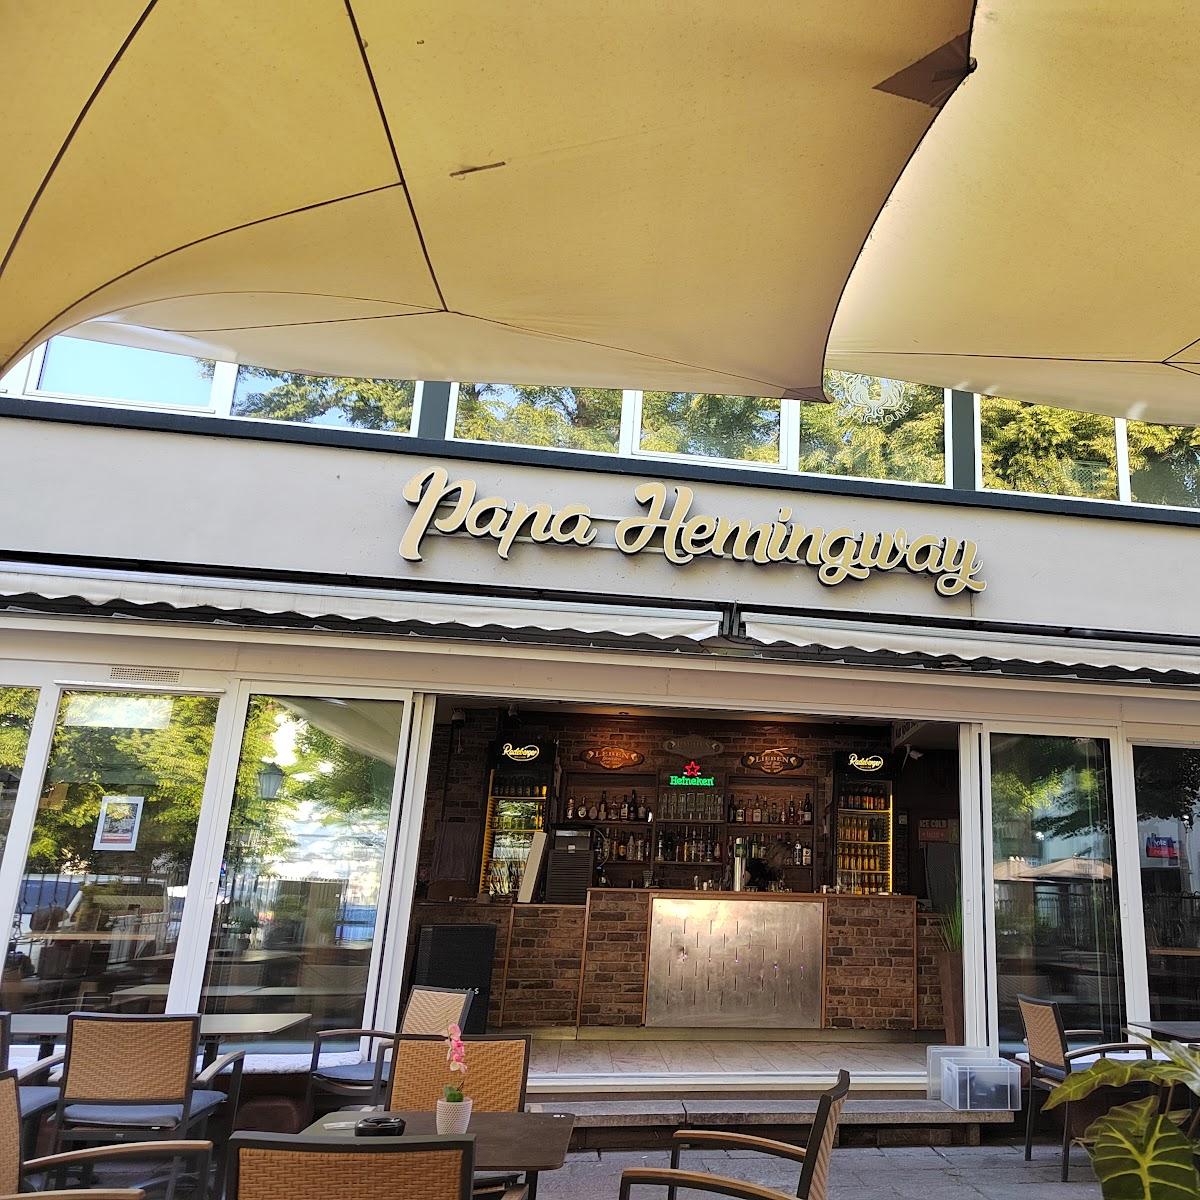 Restaurant "Papa Hemingway" in Hameln